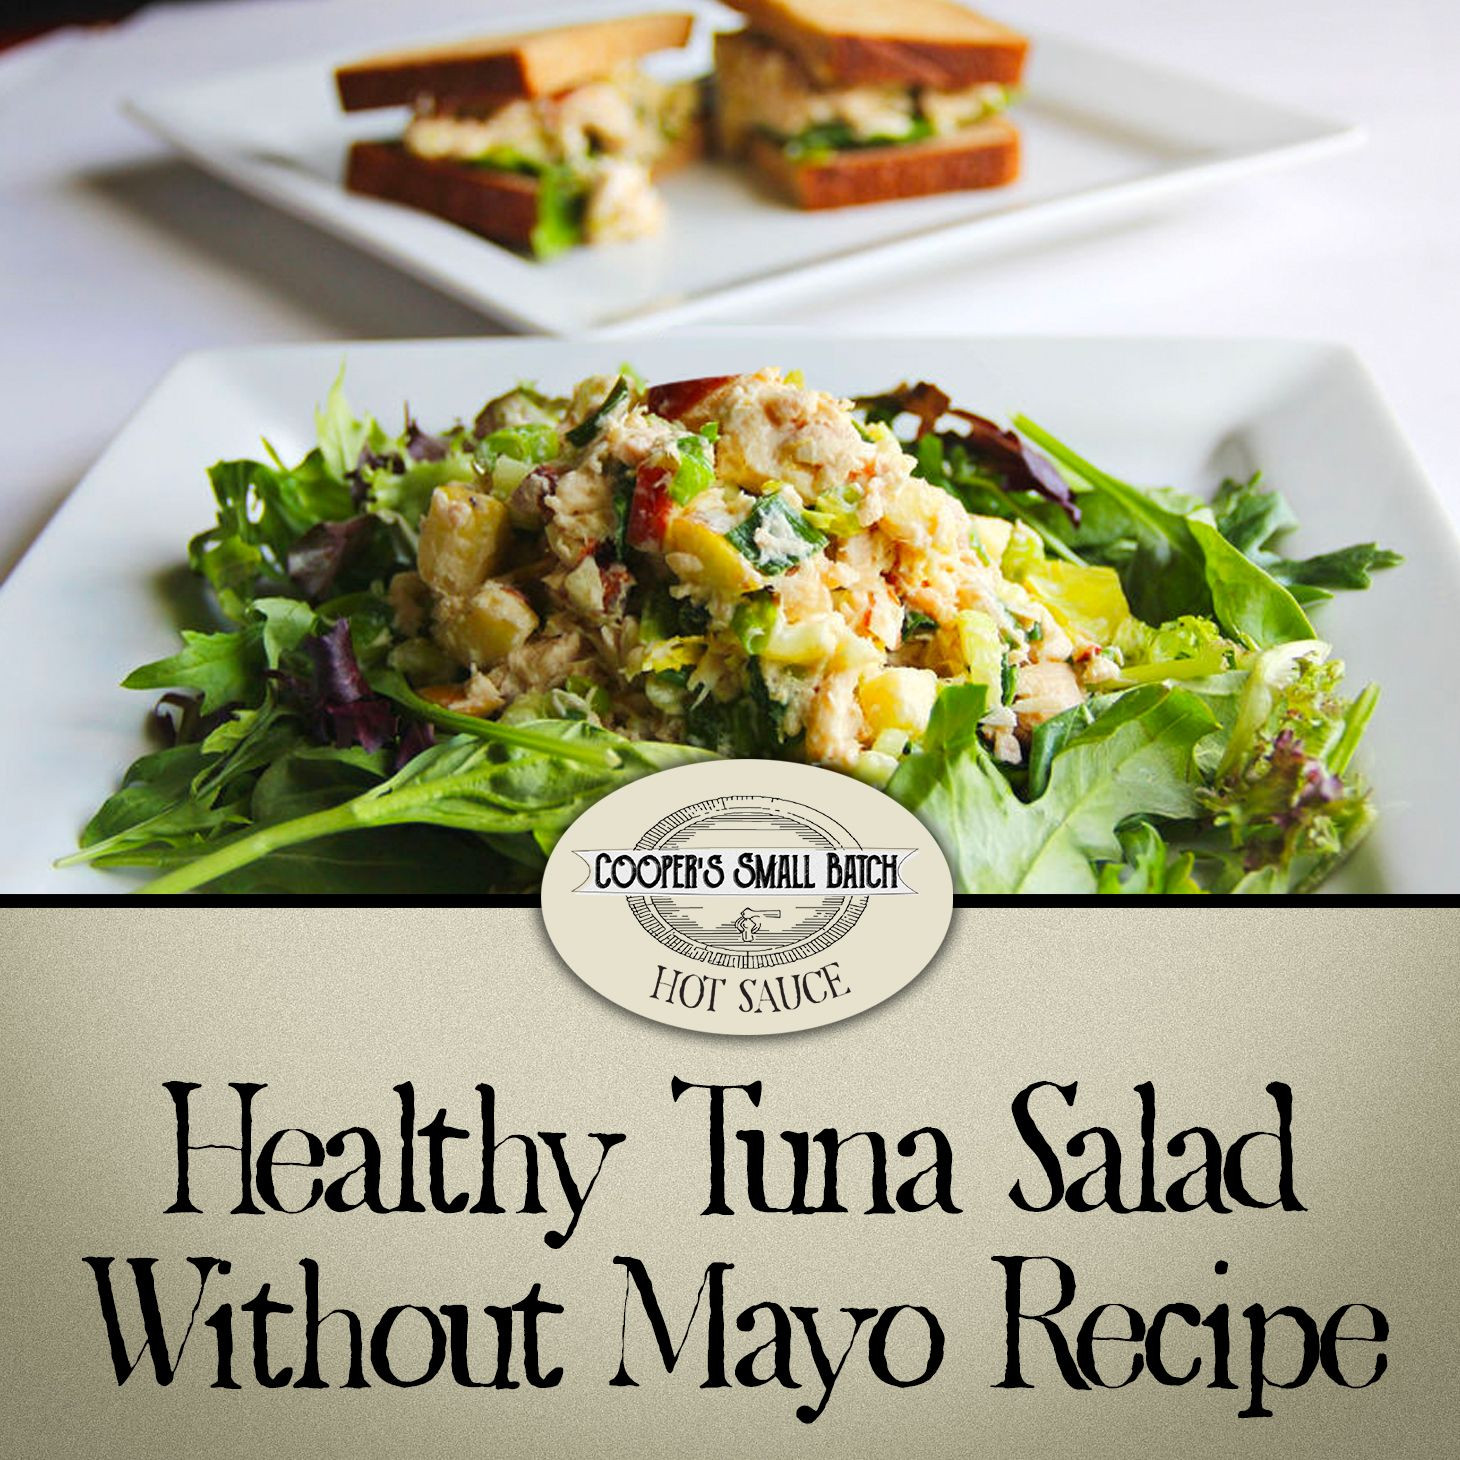 Tuna Sandwiches Without Mayo
 Healthy Tuna Salad Without Mayo